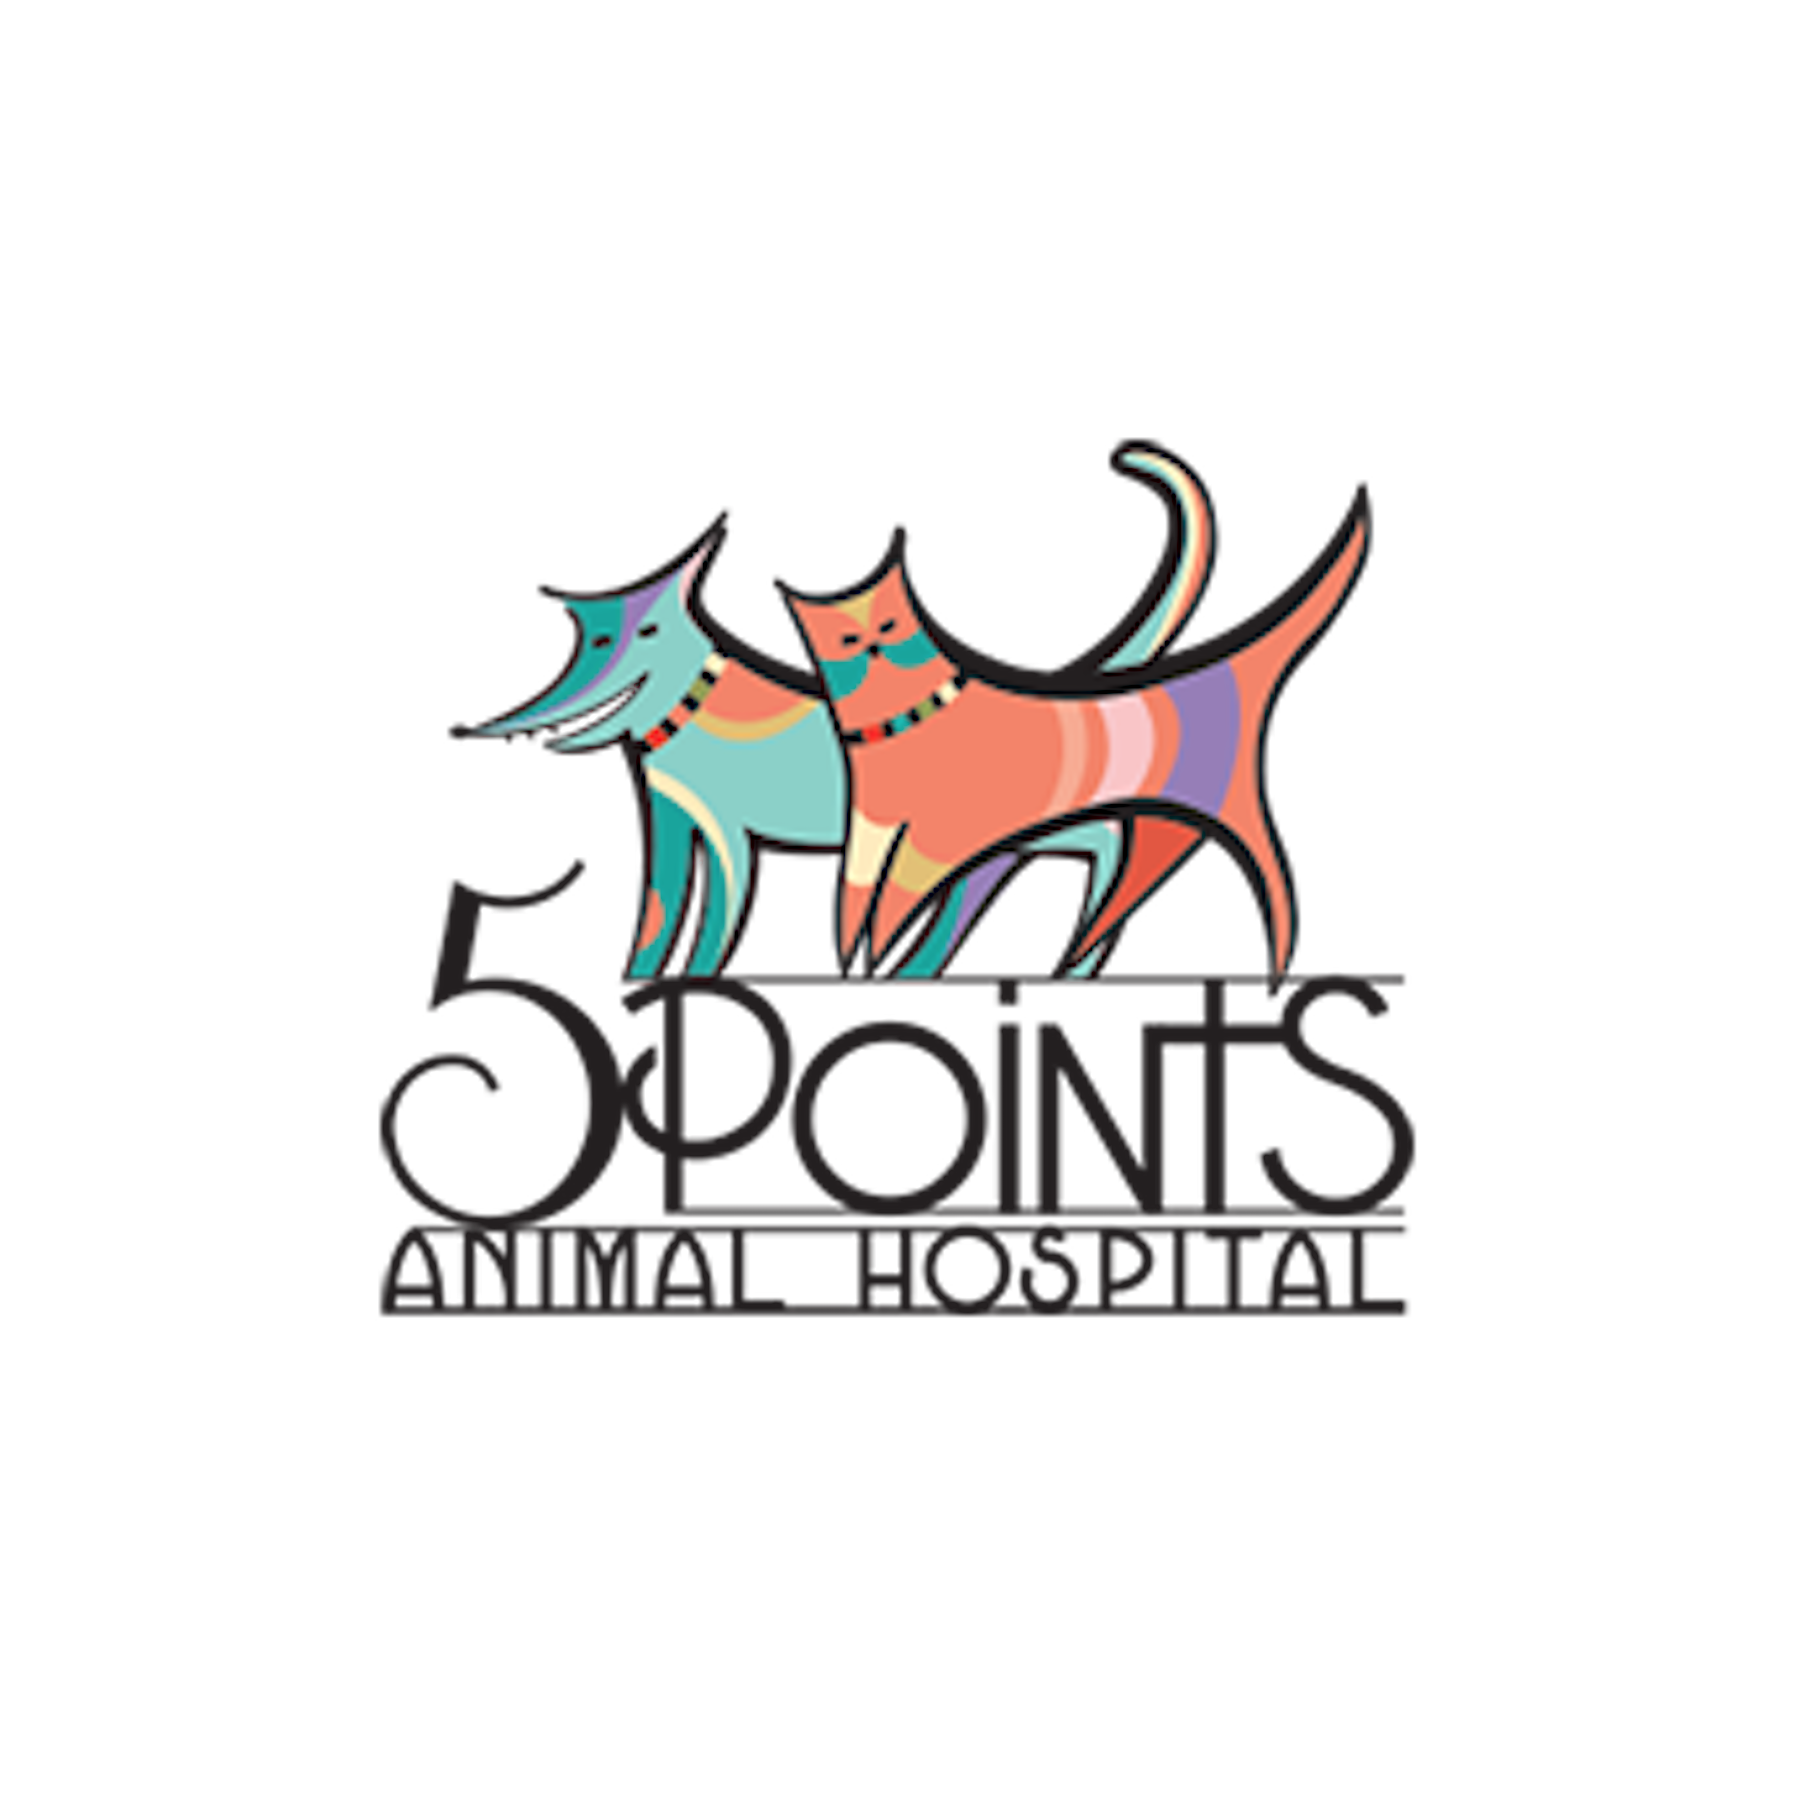 5 Points Animal Hospital